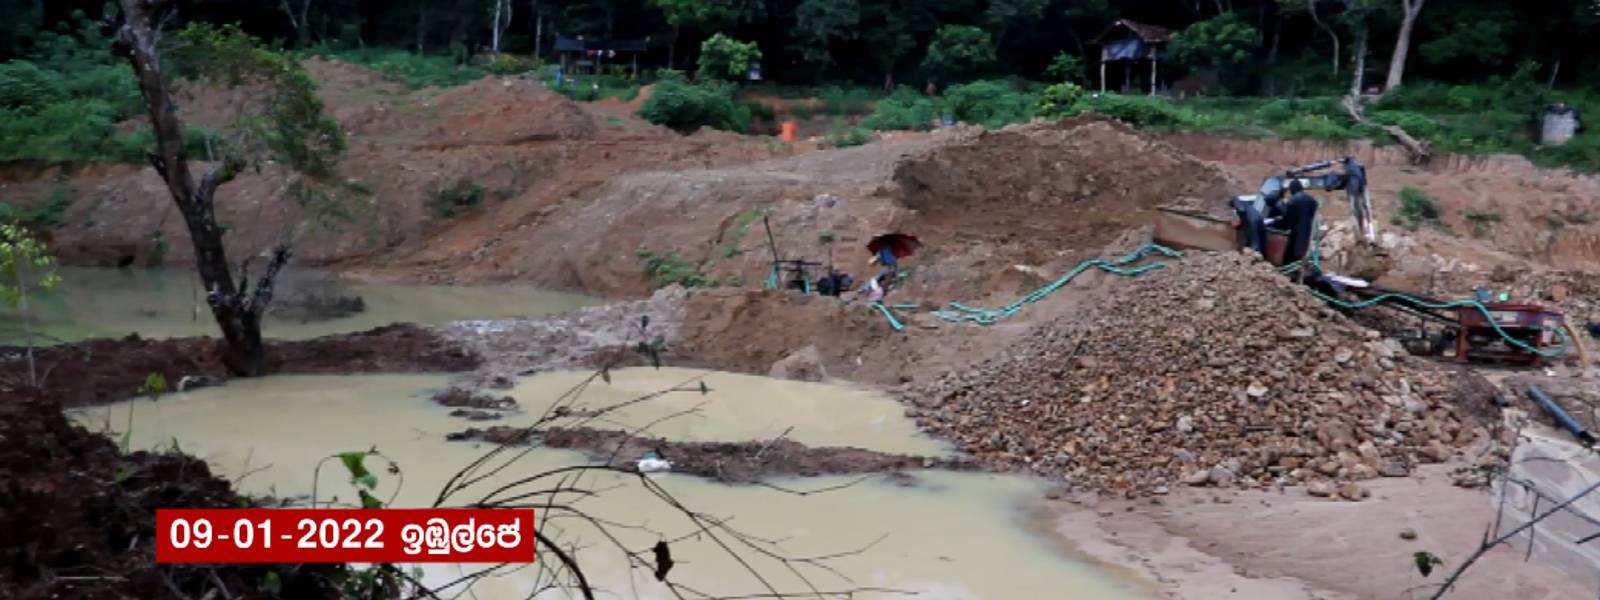 Gem mining operation in Balangoda affecting locals